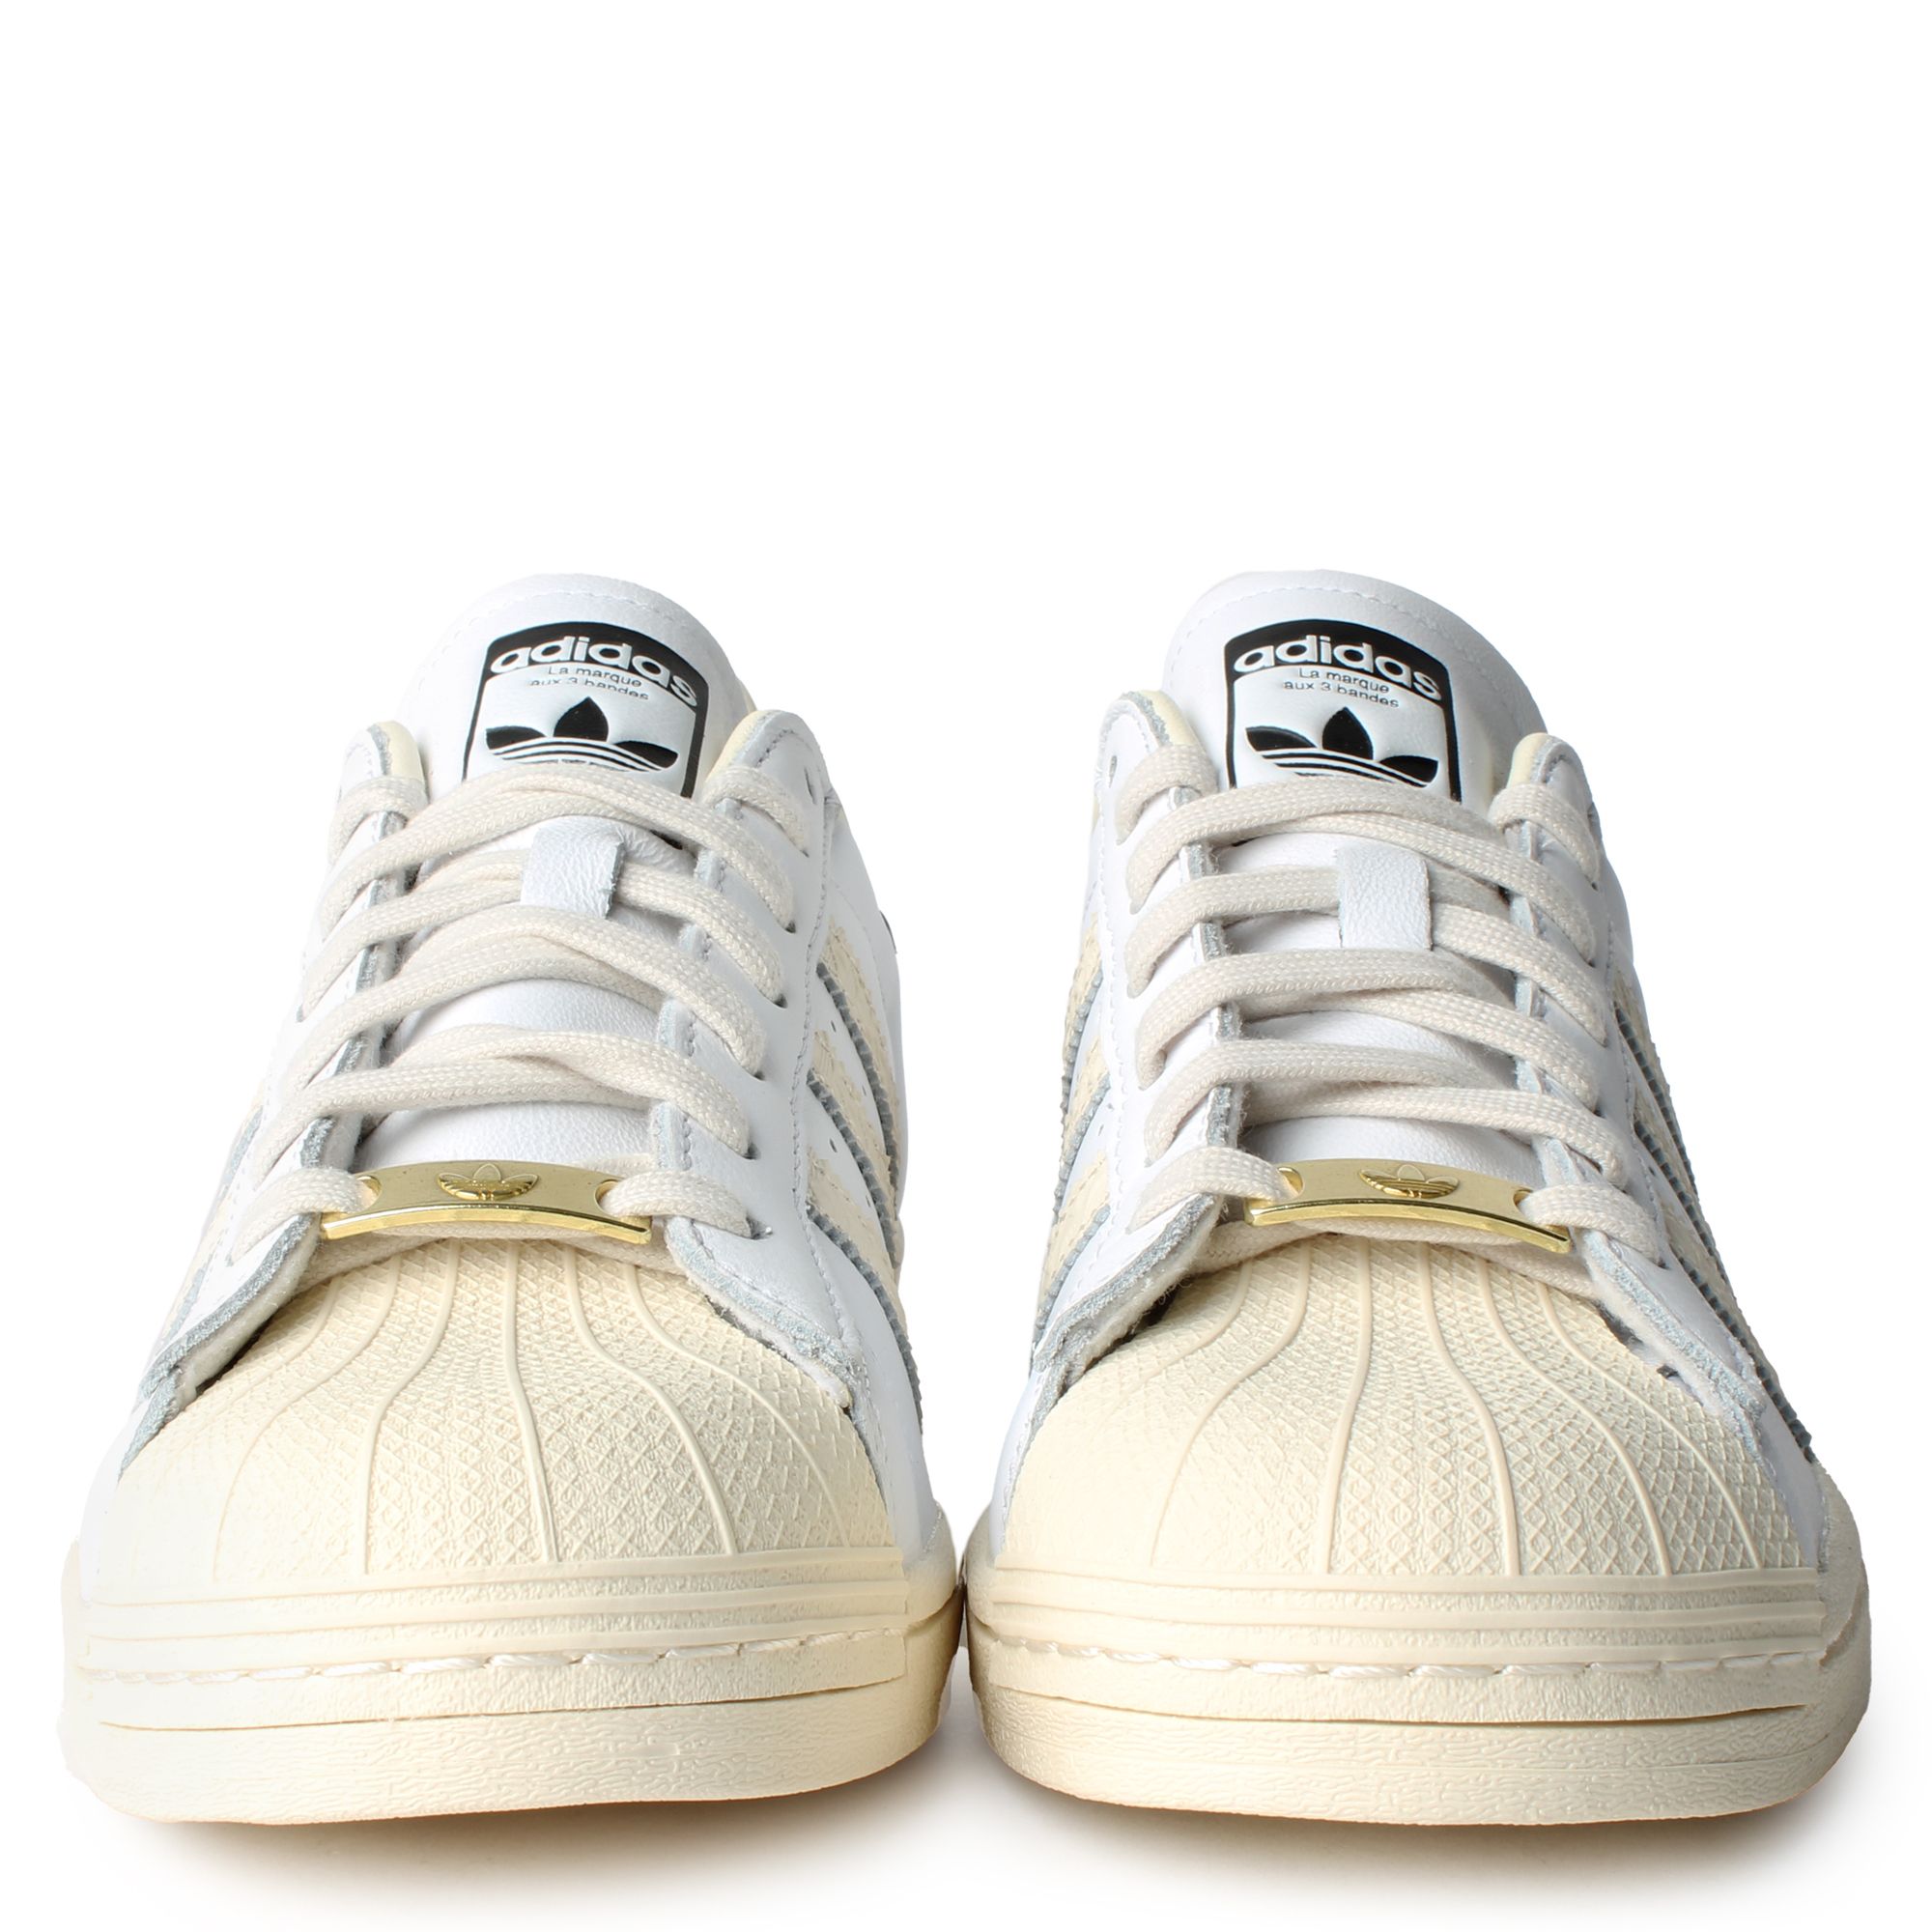 Adidas - Superstar Vegan Core Black/Ftwr White/Gold Met. - Shoes